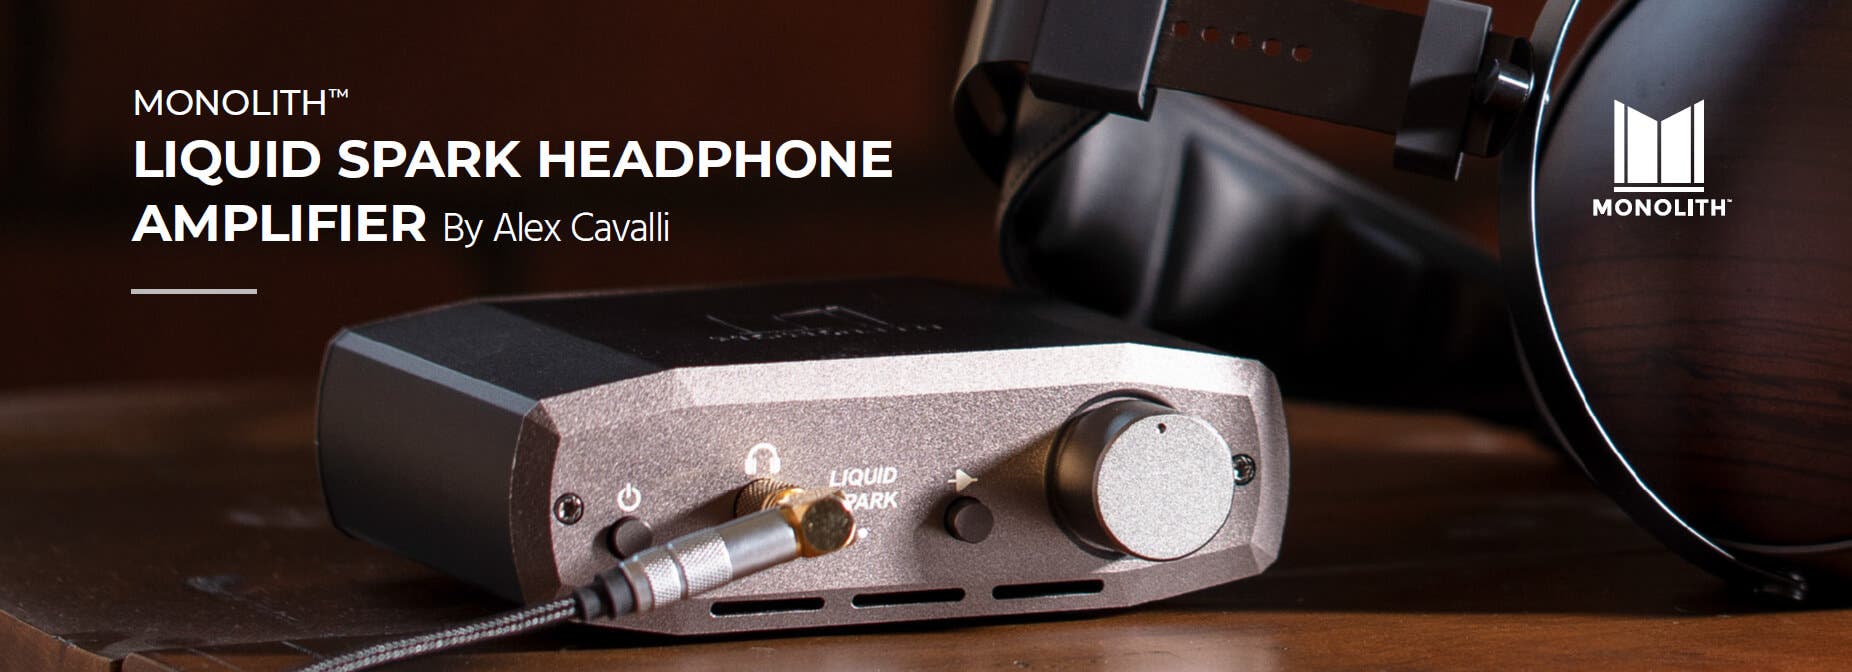 Monolith Liquid Spark Headphone Amplifier by Alex Cavalli Malaysia.jpg